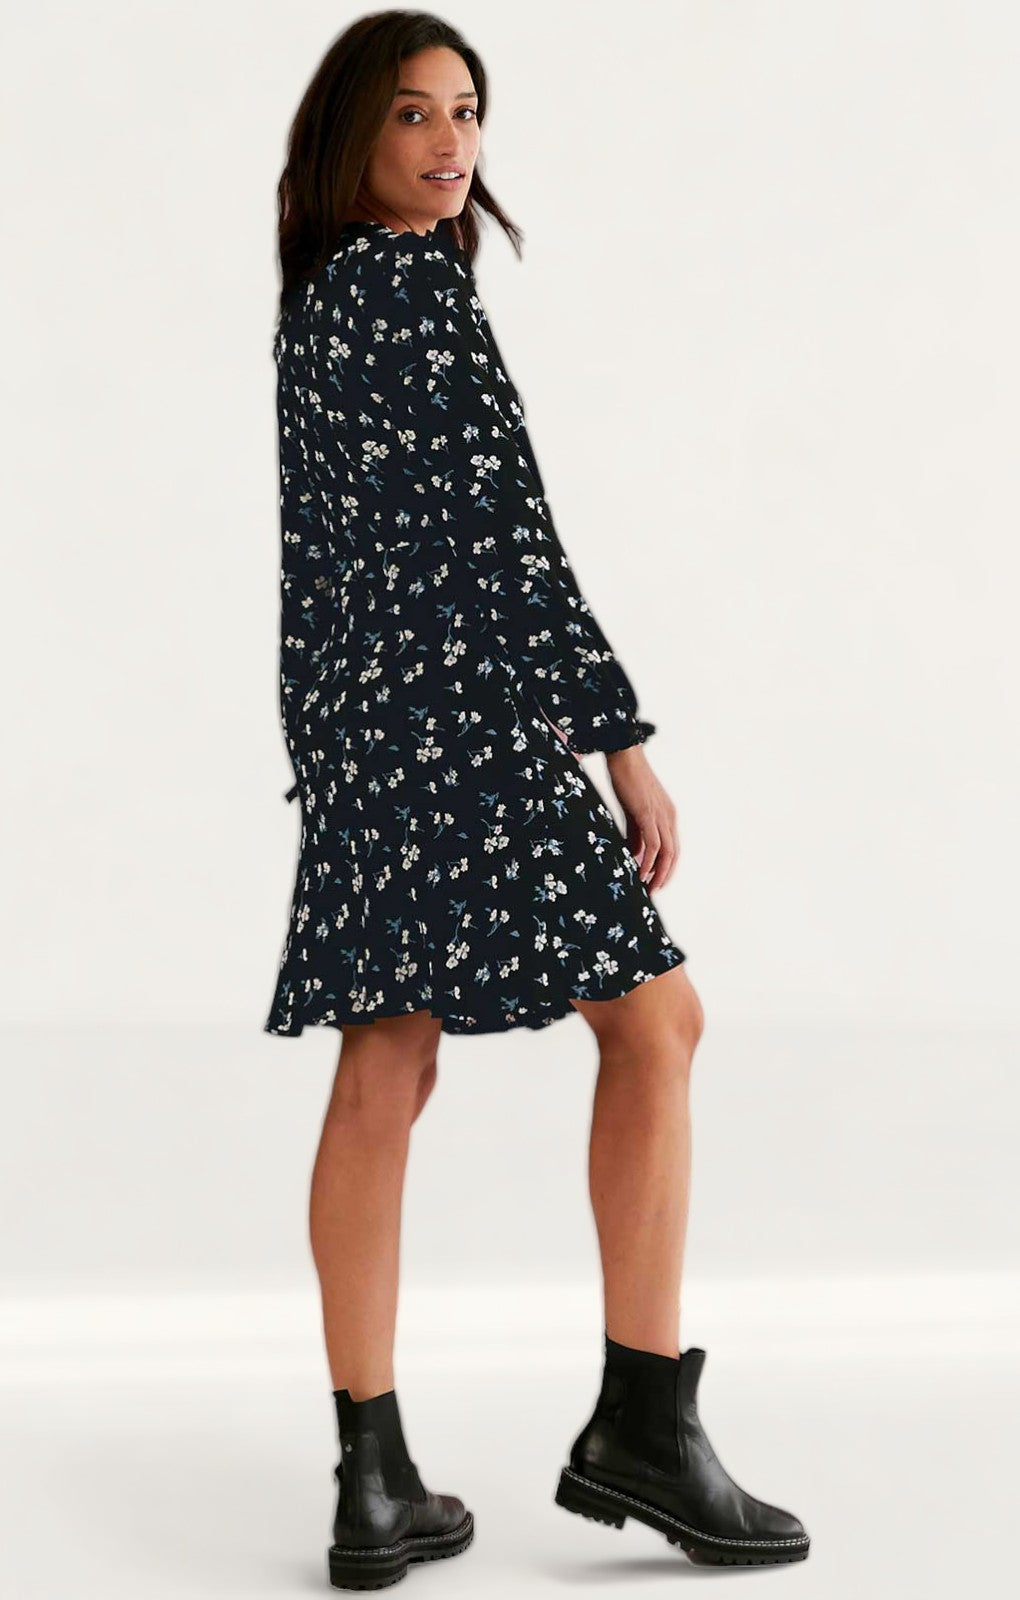 M&S X Ghost Floral Frill Detail Knee Length Tea Dress